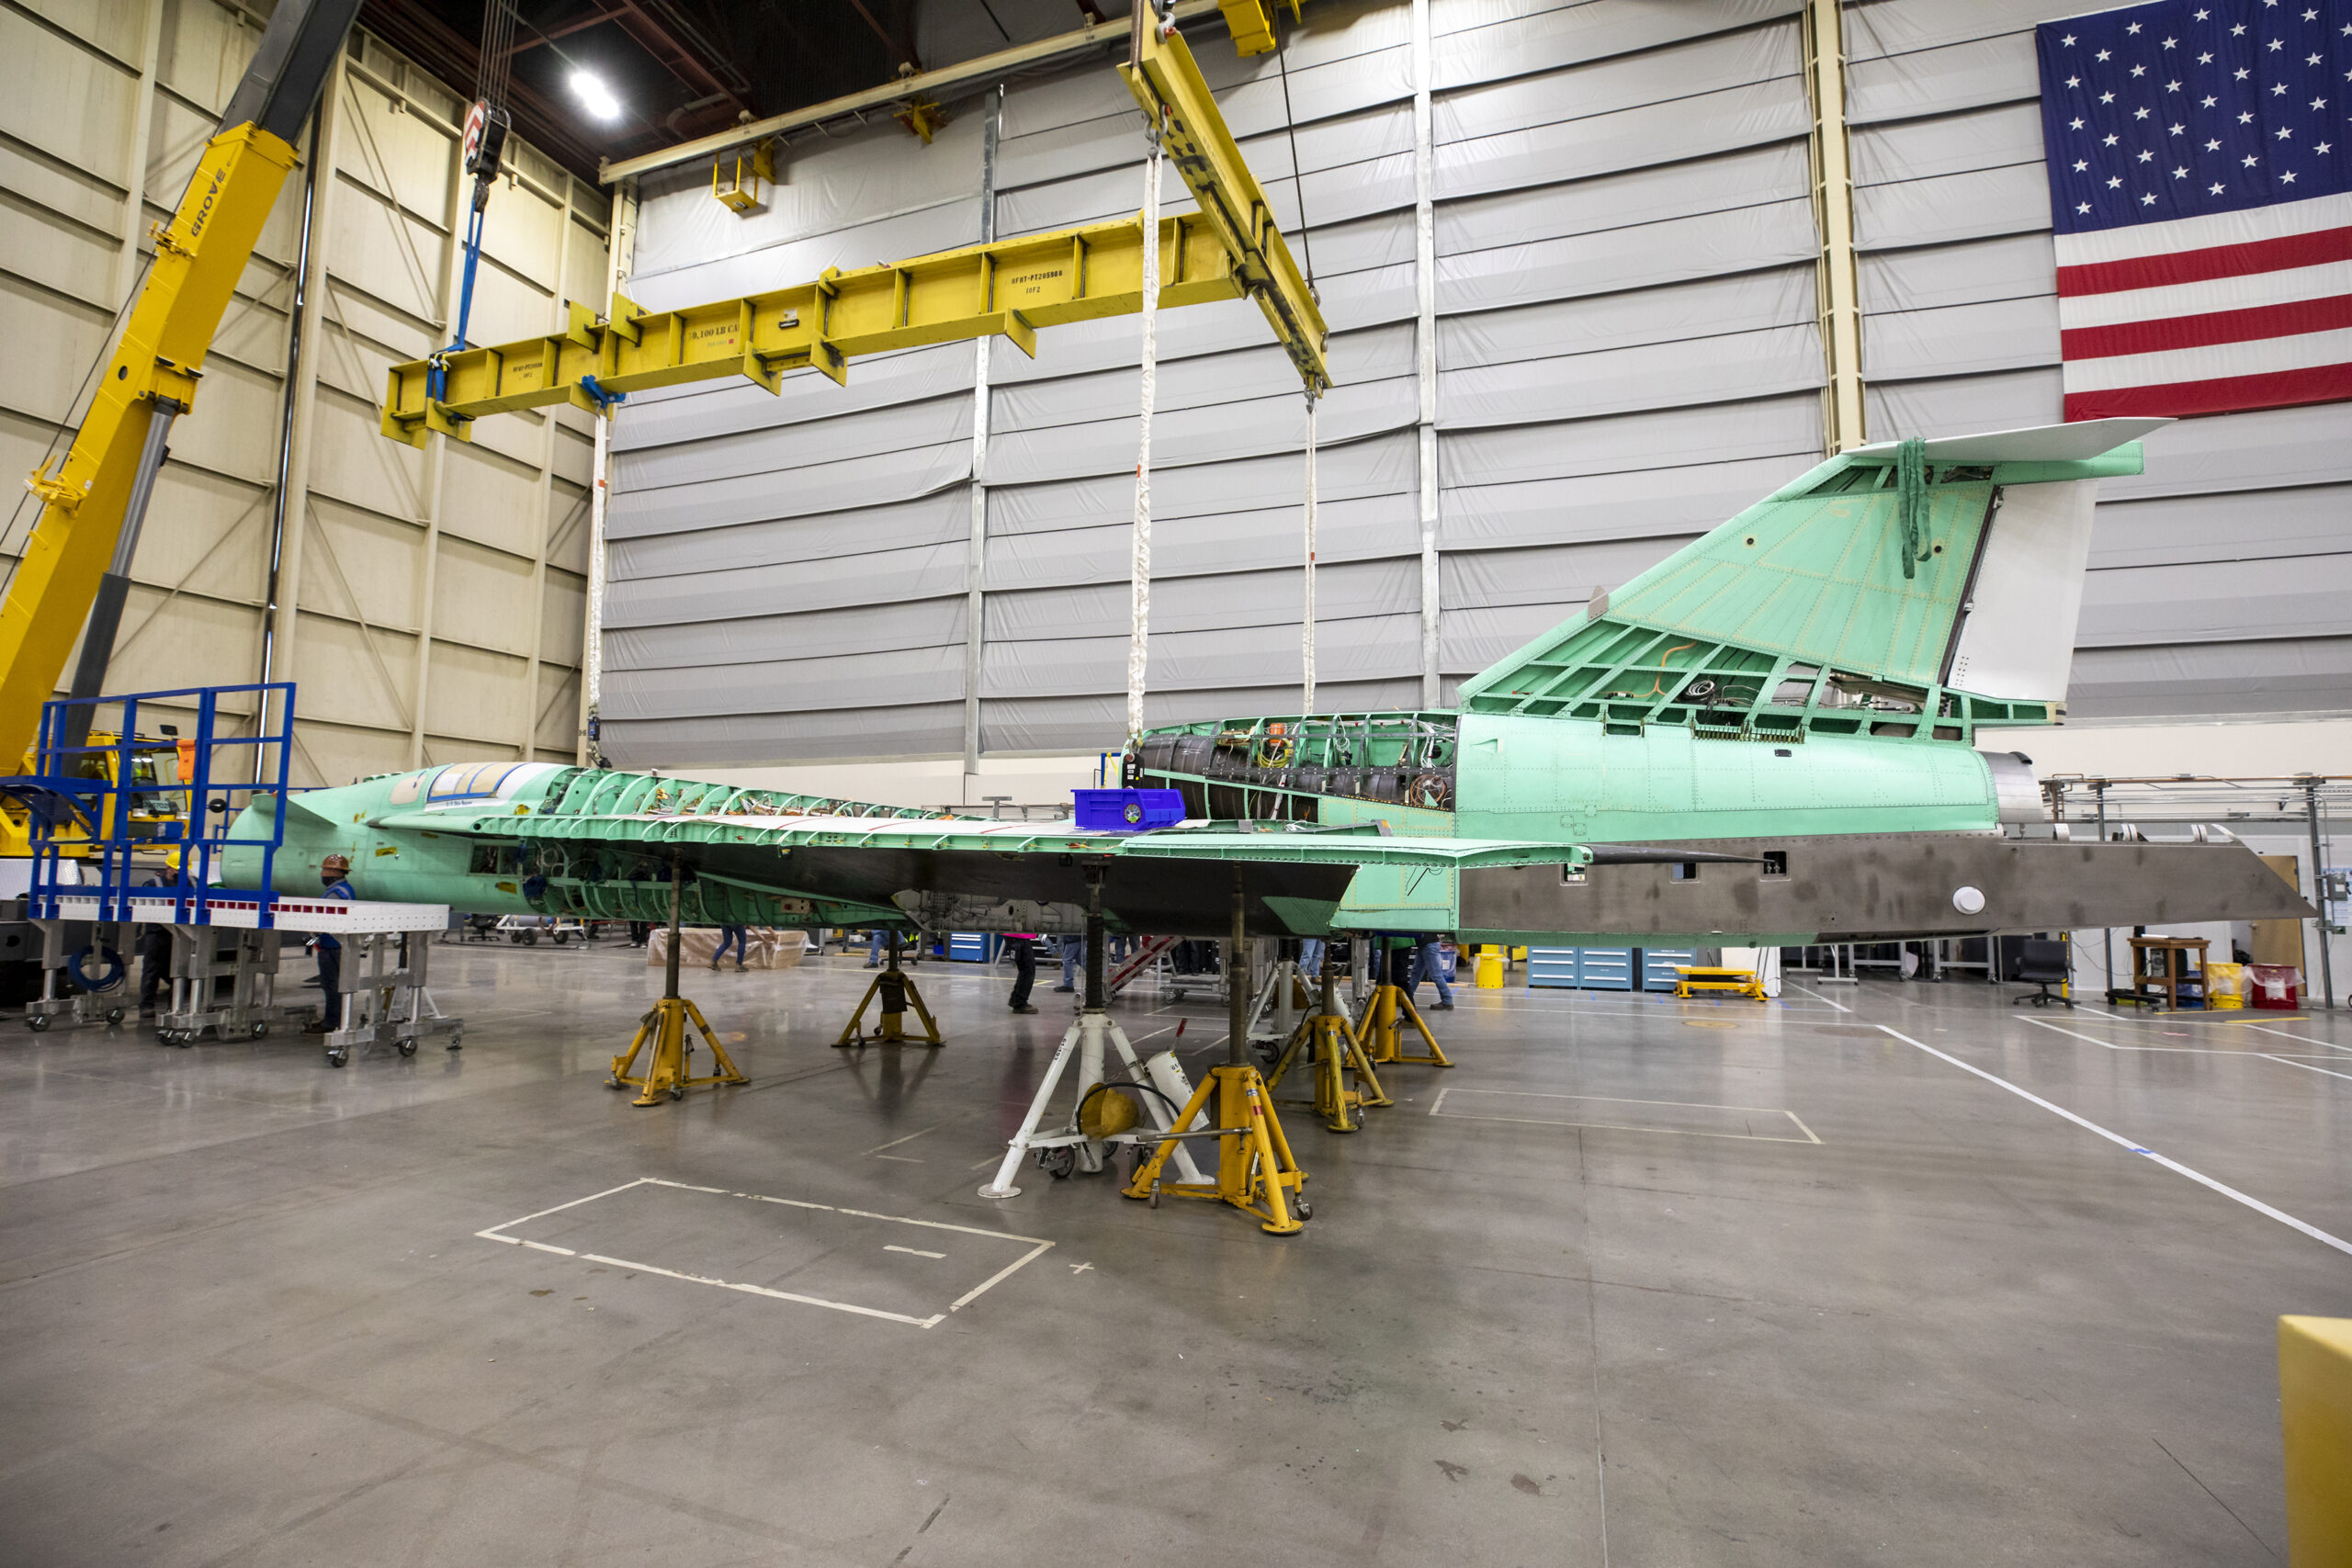 NASA Supersonic X-Plane Stands Alone